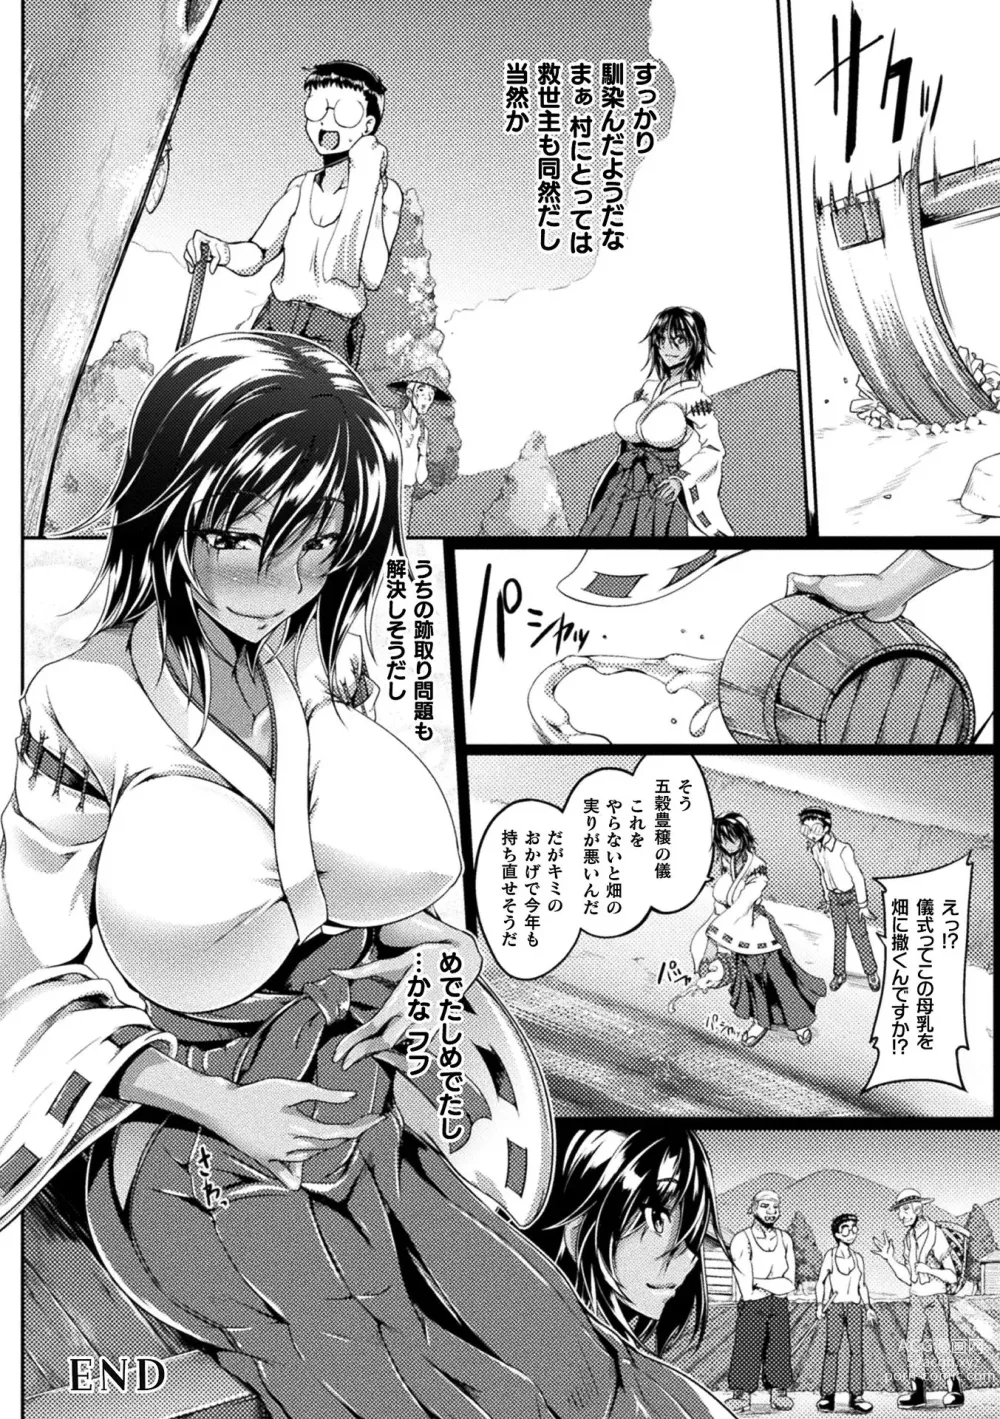 Page 242 of manga Soukou Shinsei Twinkle Twins ~Shokuen no Utage~ + Denshi Shoseki-ban Gentei Tokuten Shiritakute Sister Heart